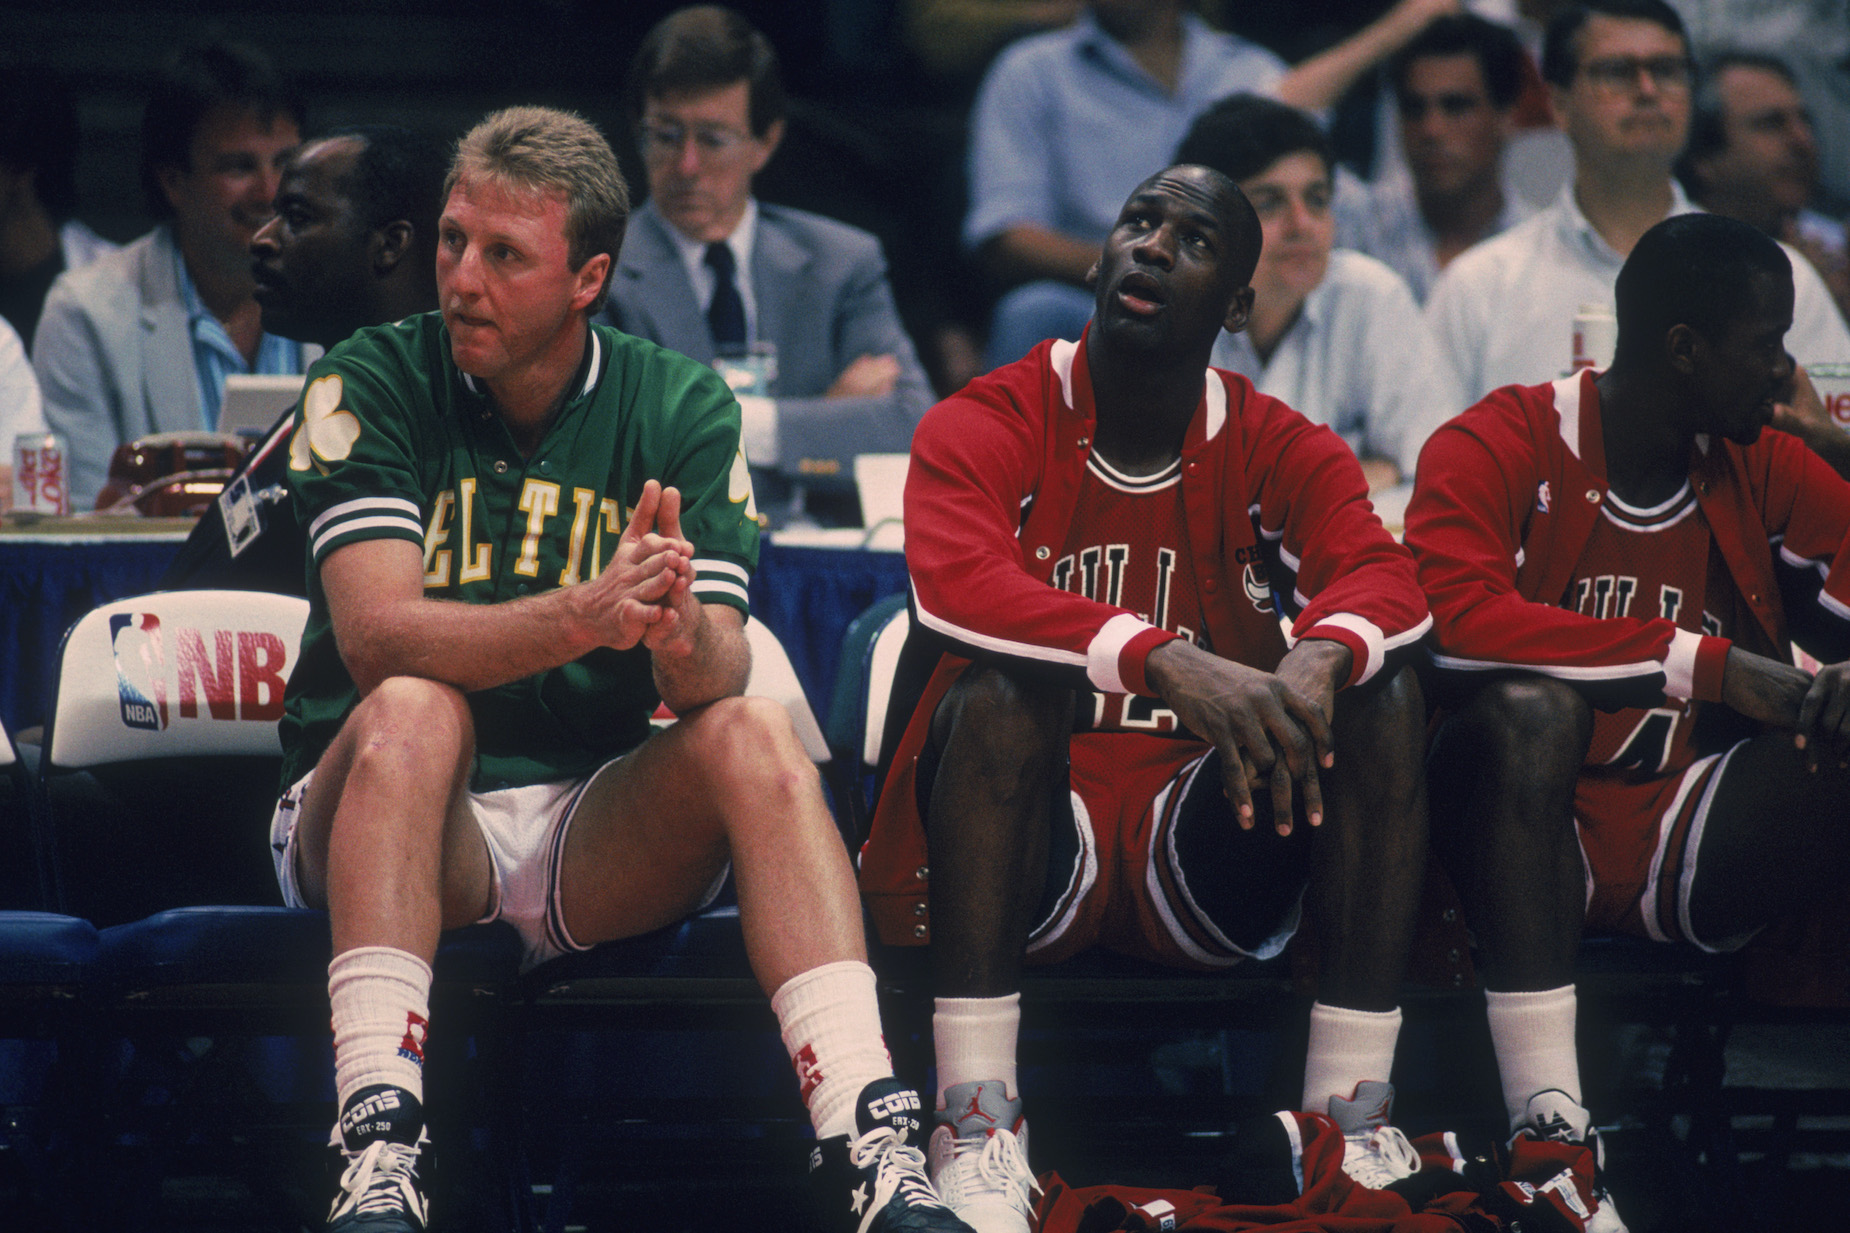 NBA legends Michael Jordan and Larry Bird sit together during an NBA All-Star event.